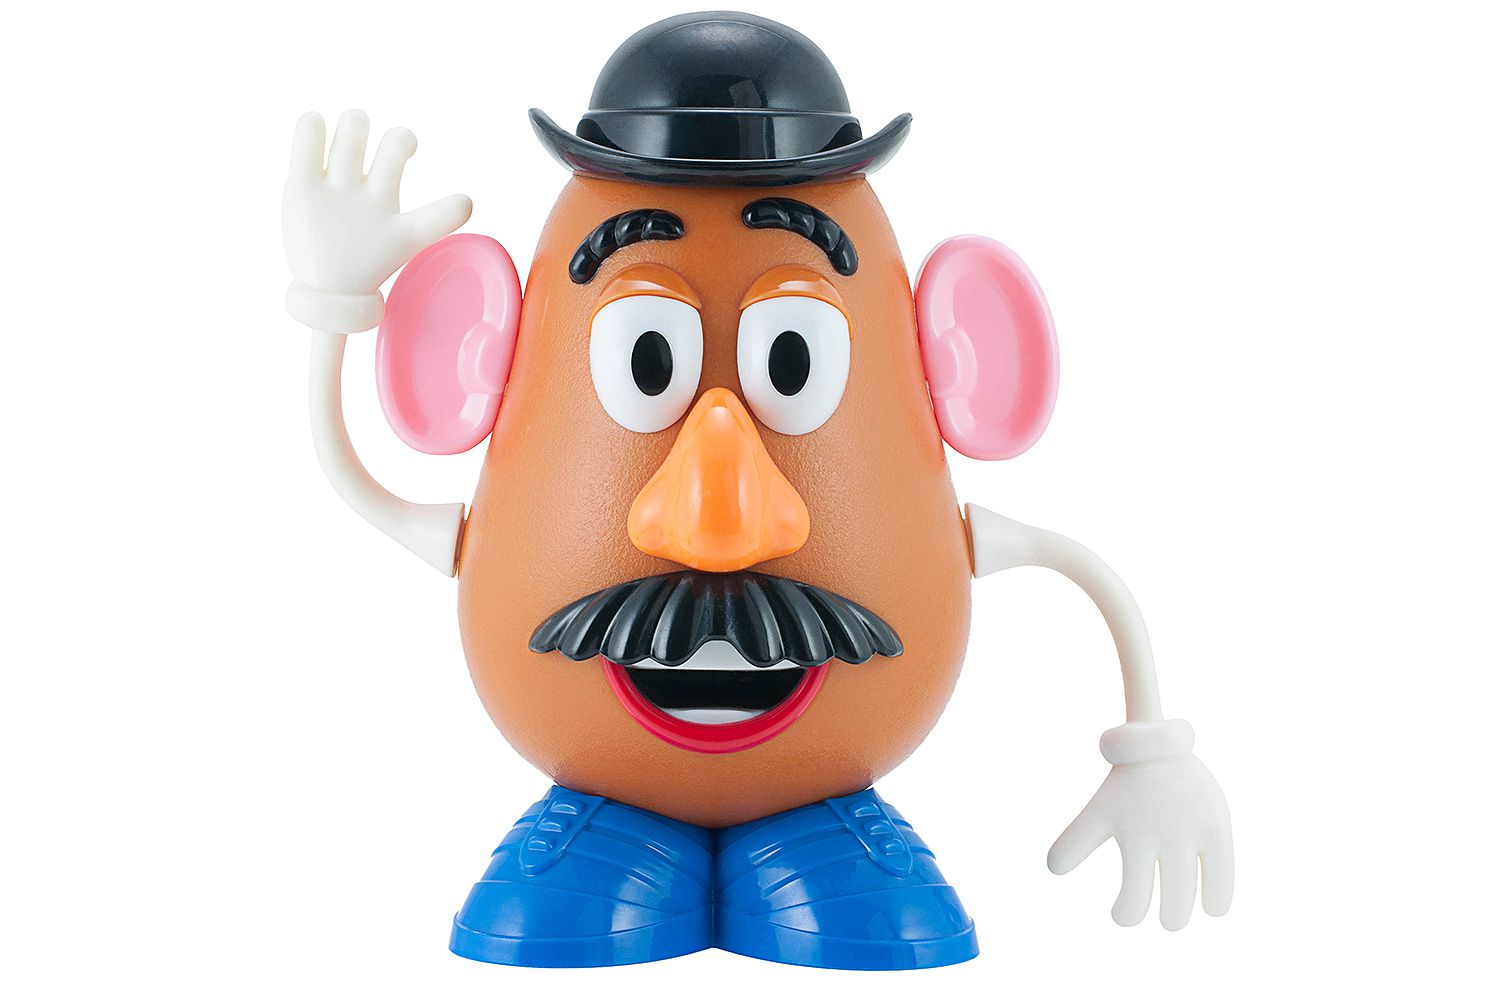 Details about   Mr Potato Potatoe Head Gender Neutral Branding Change New In Box 